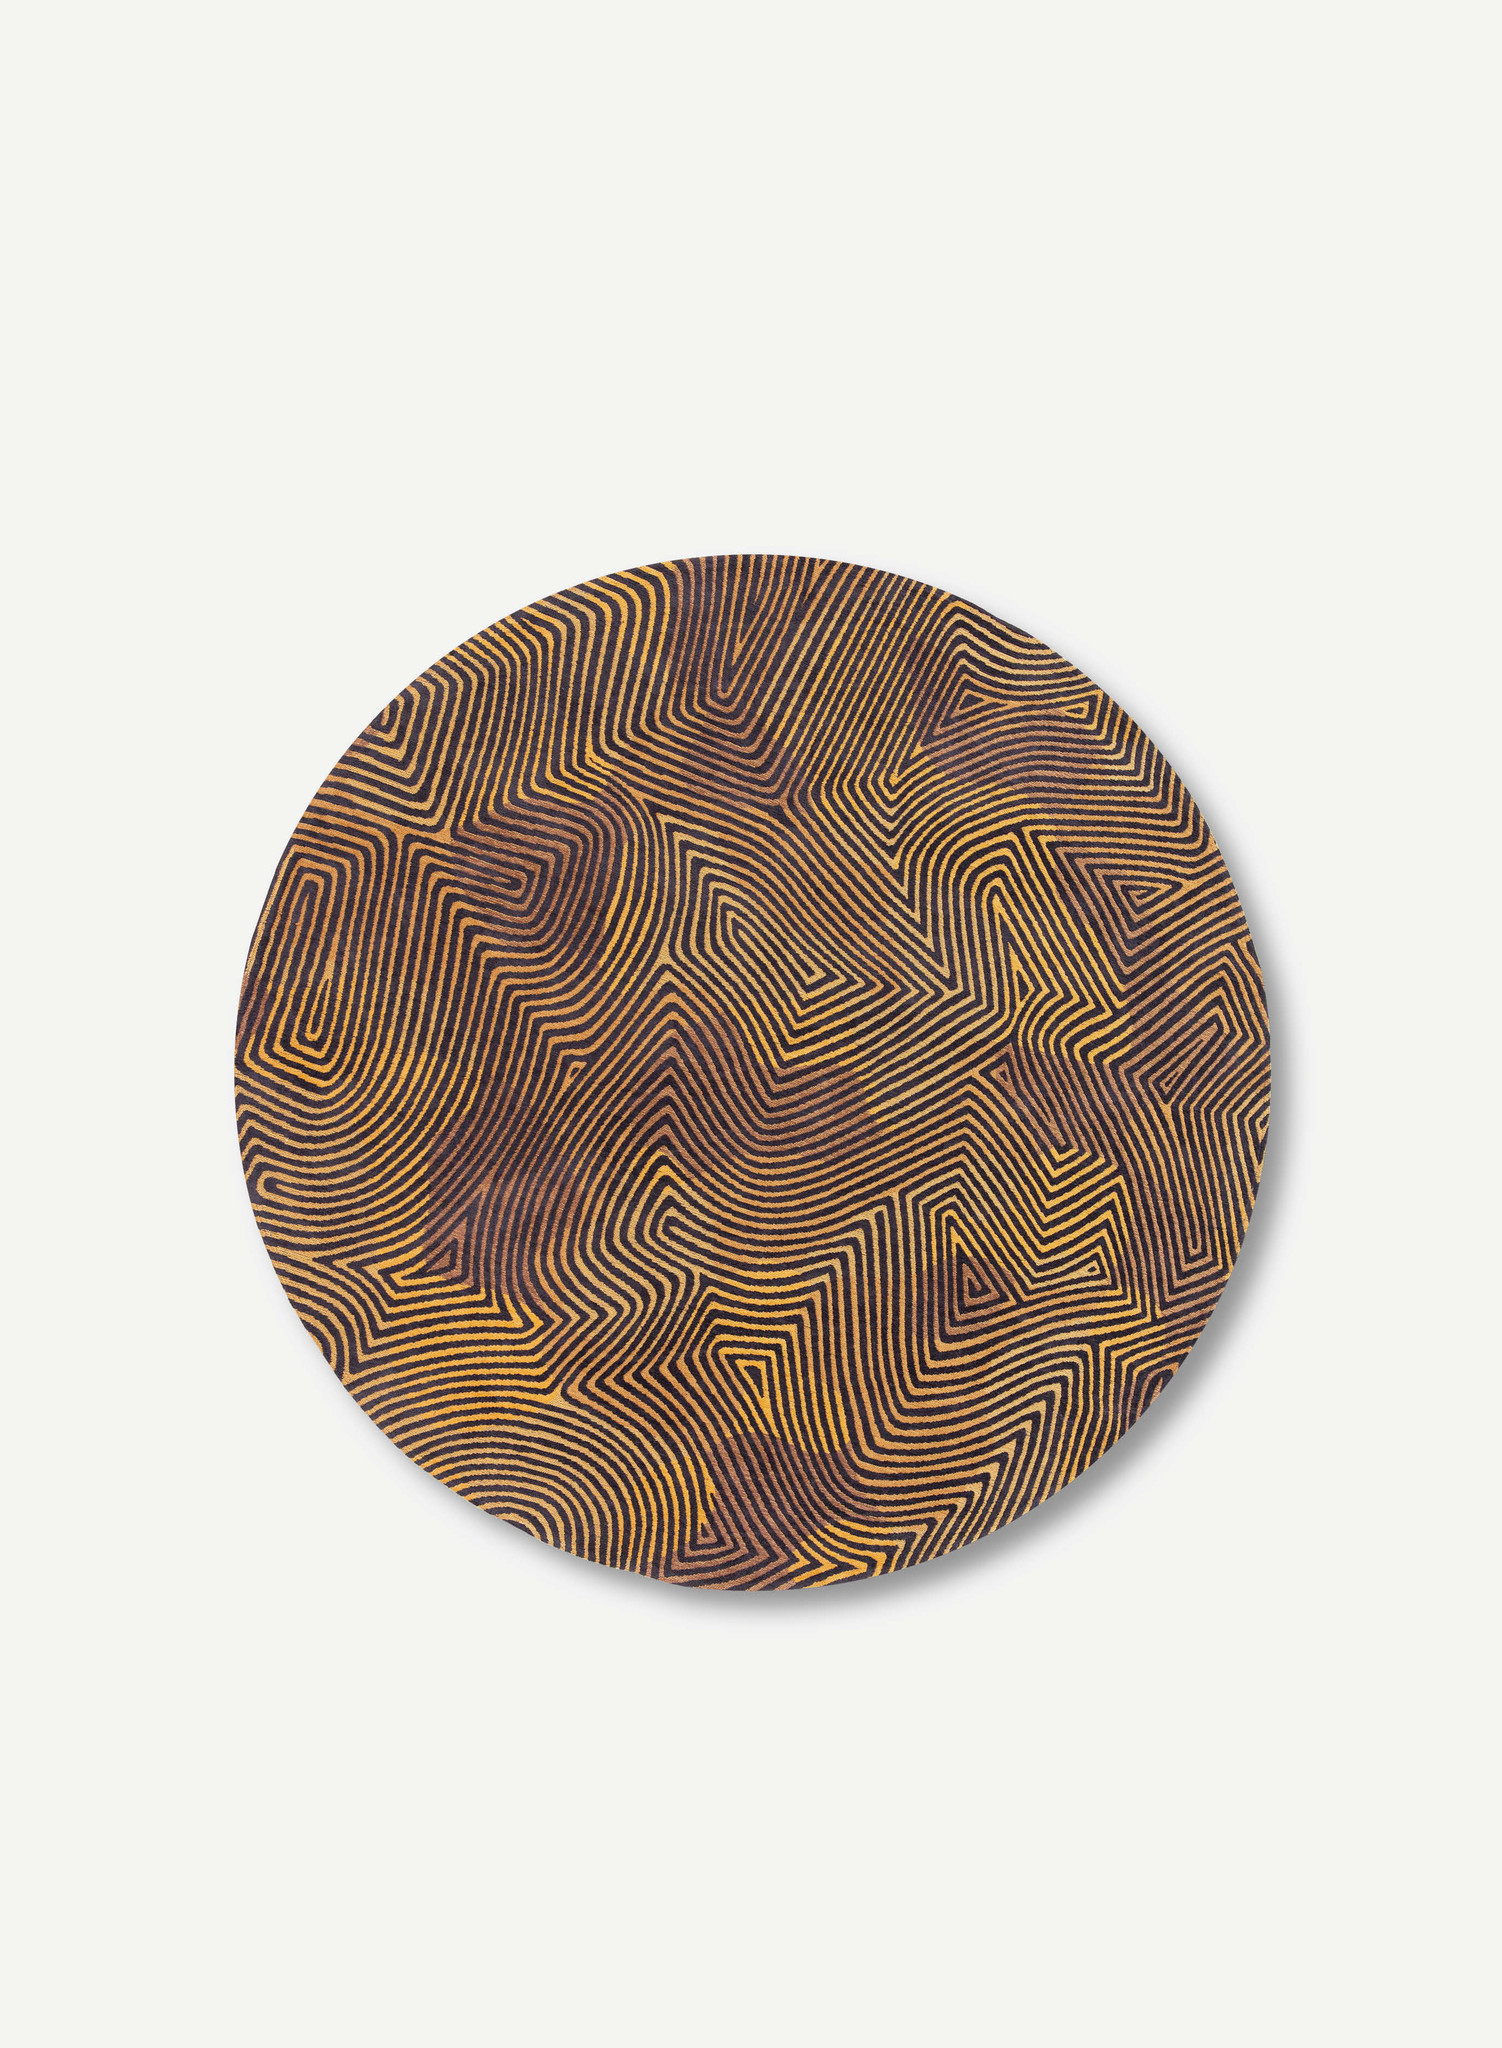 Black Gold Flatwoven Rug ☞ Size: 2' 7" x 5' (80 x 150 cm)